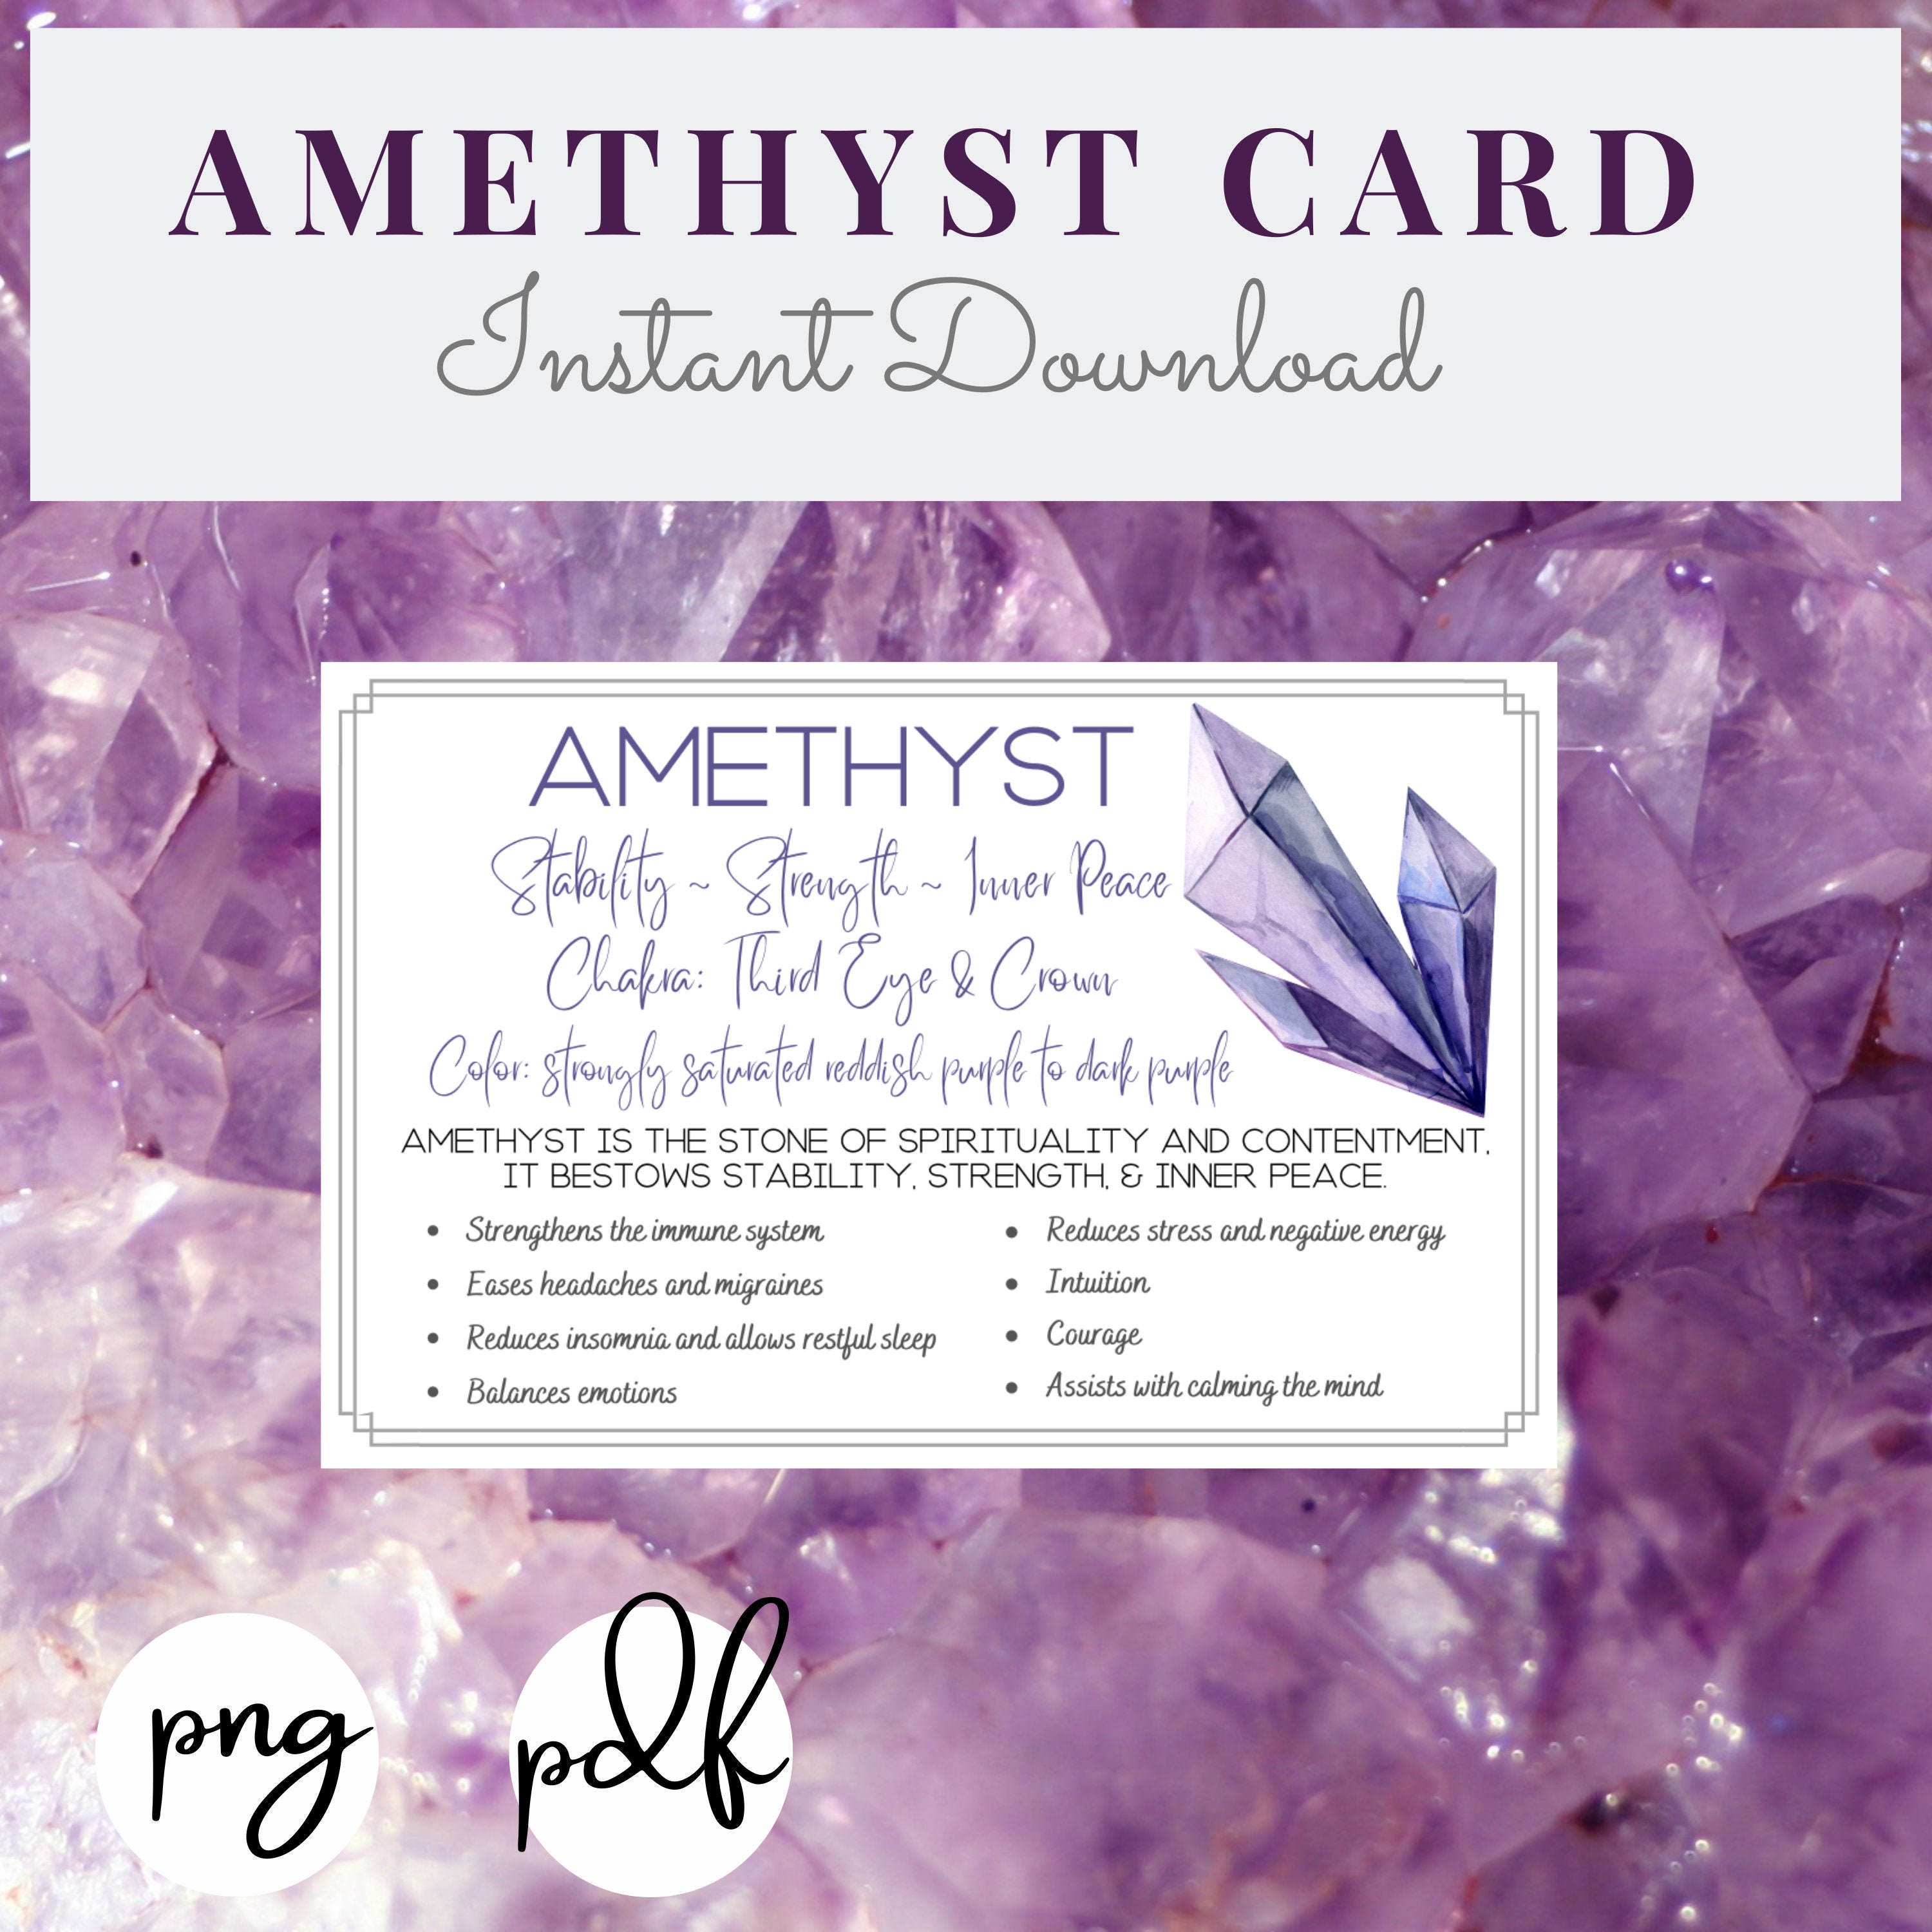 Spiritual and Healing Properties of Amethyst